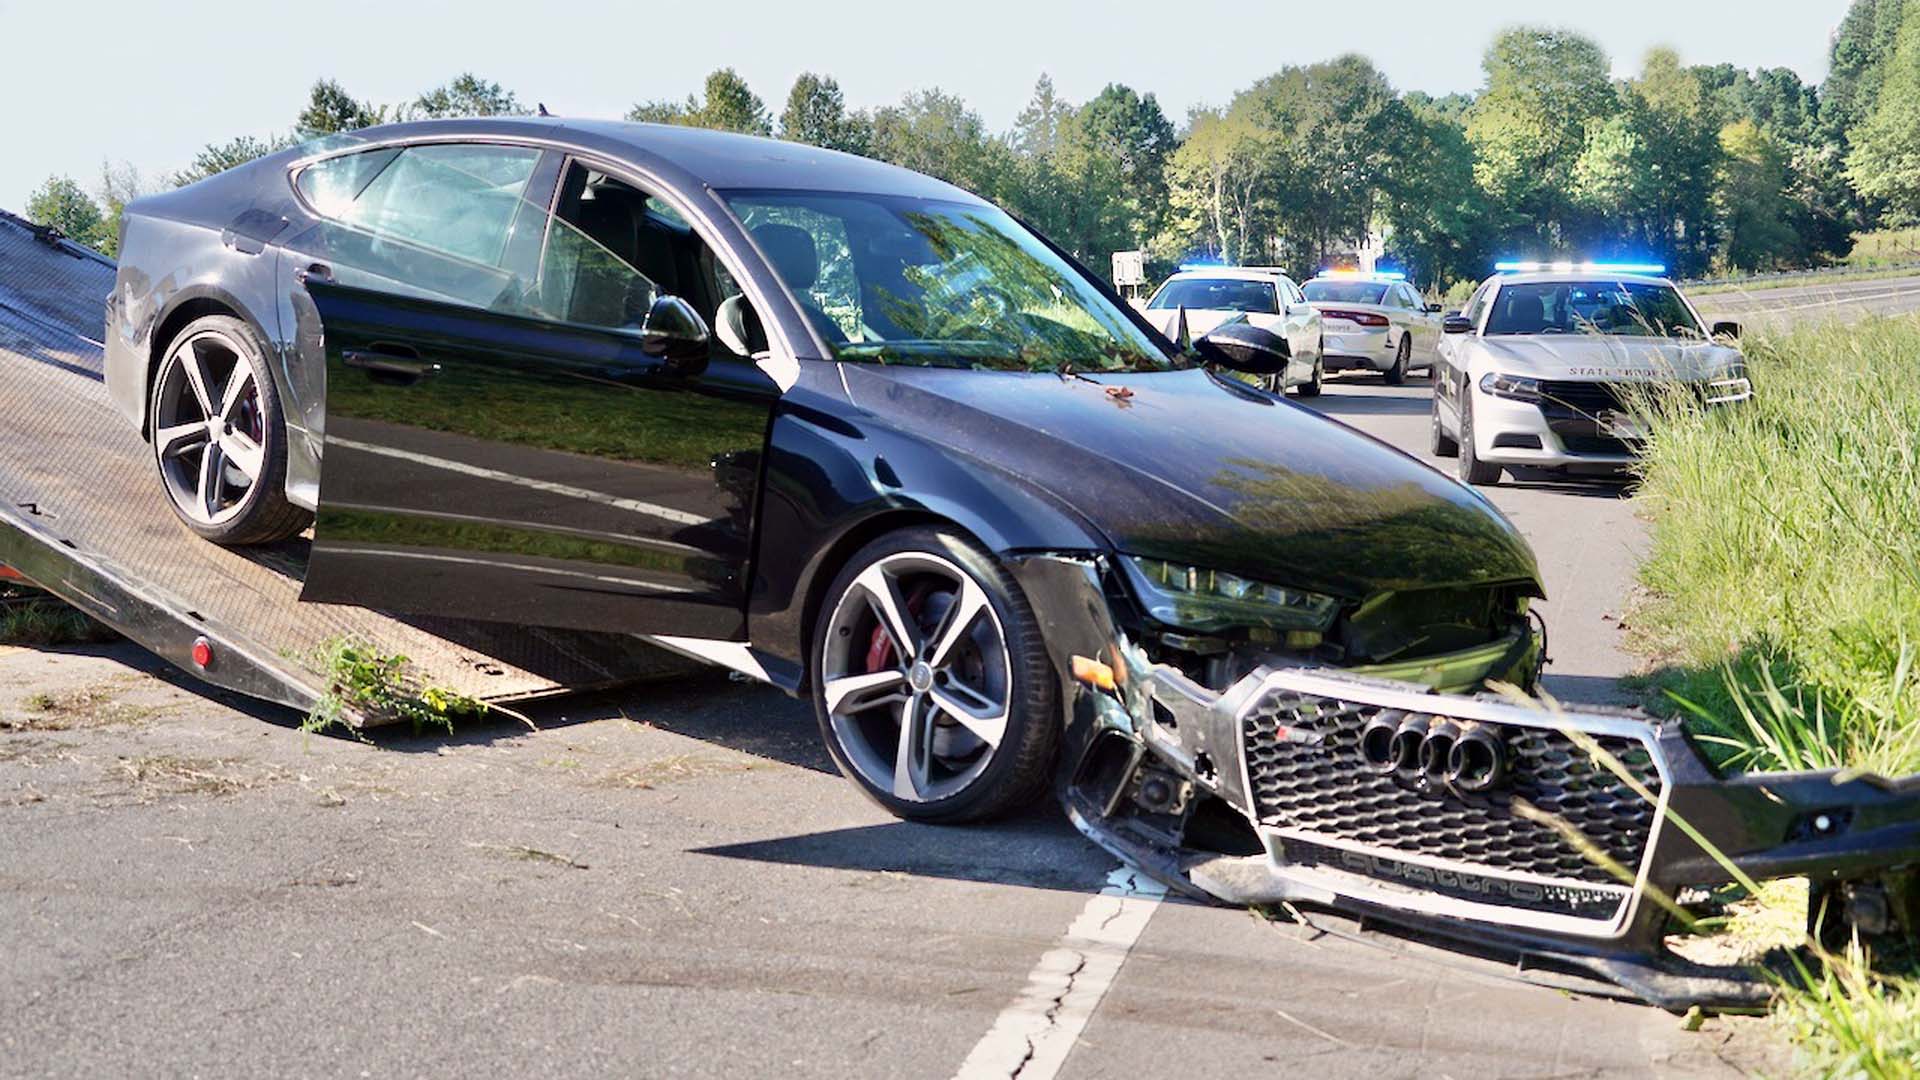 Rs6 crash. Audi rs7 crash. Audi rs6 crash. Audi rs6 crash 200. Audi rs6 300km/h crash.